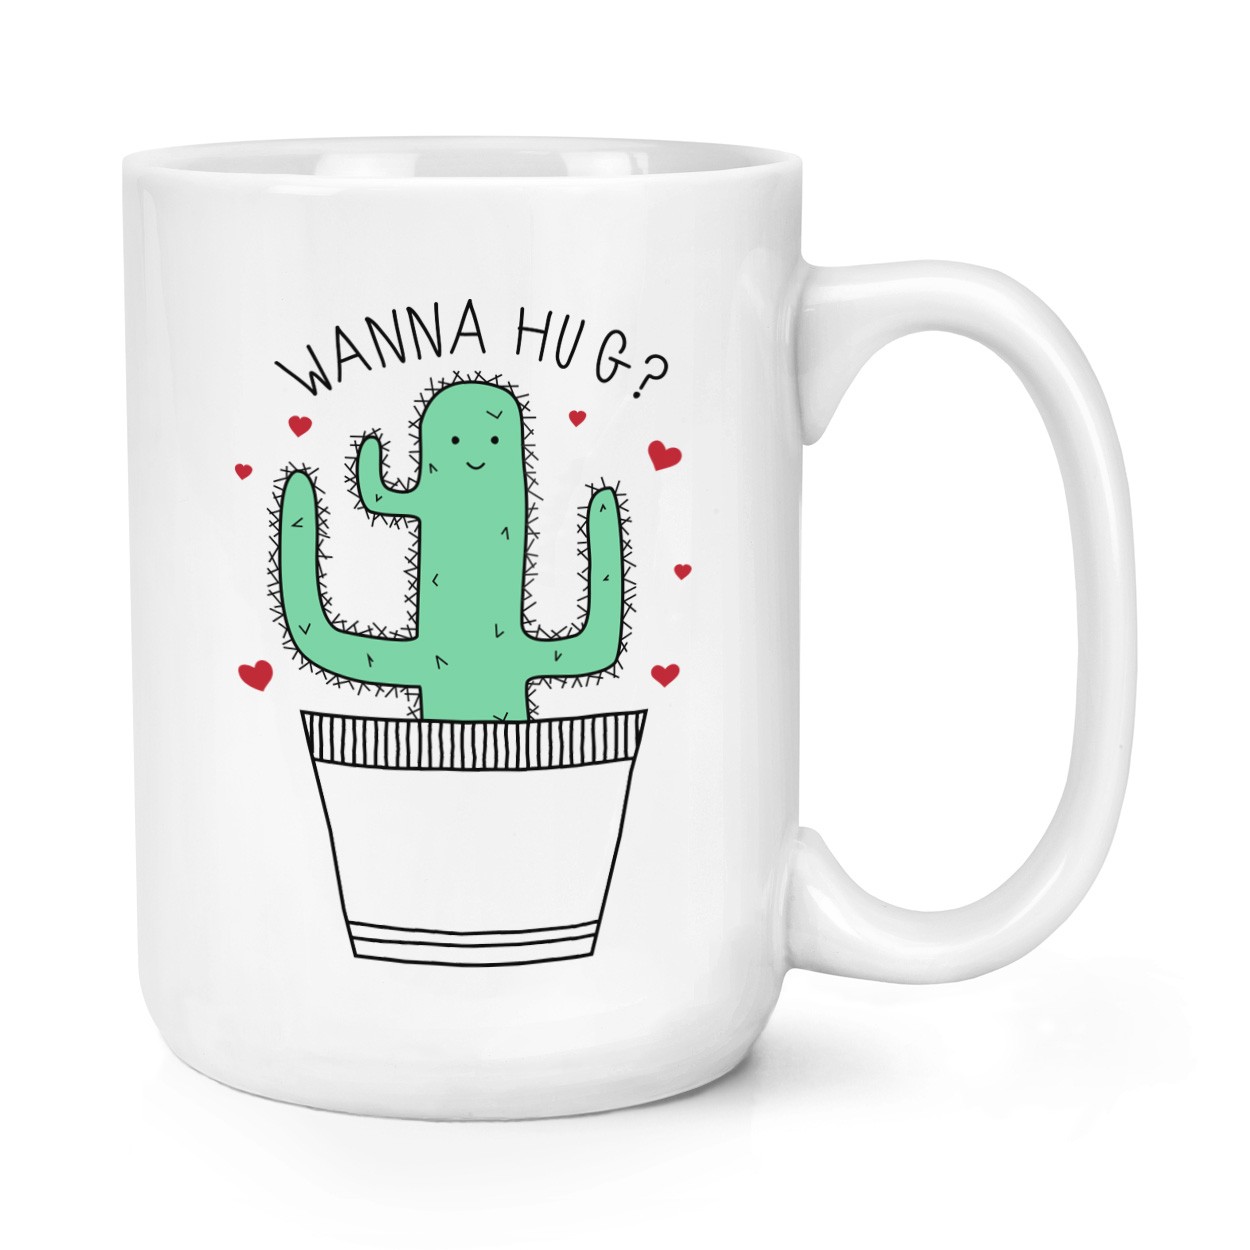 Cactus Wanna Hug 15oz Large Cup Mug